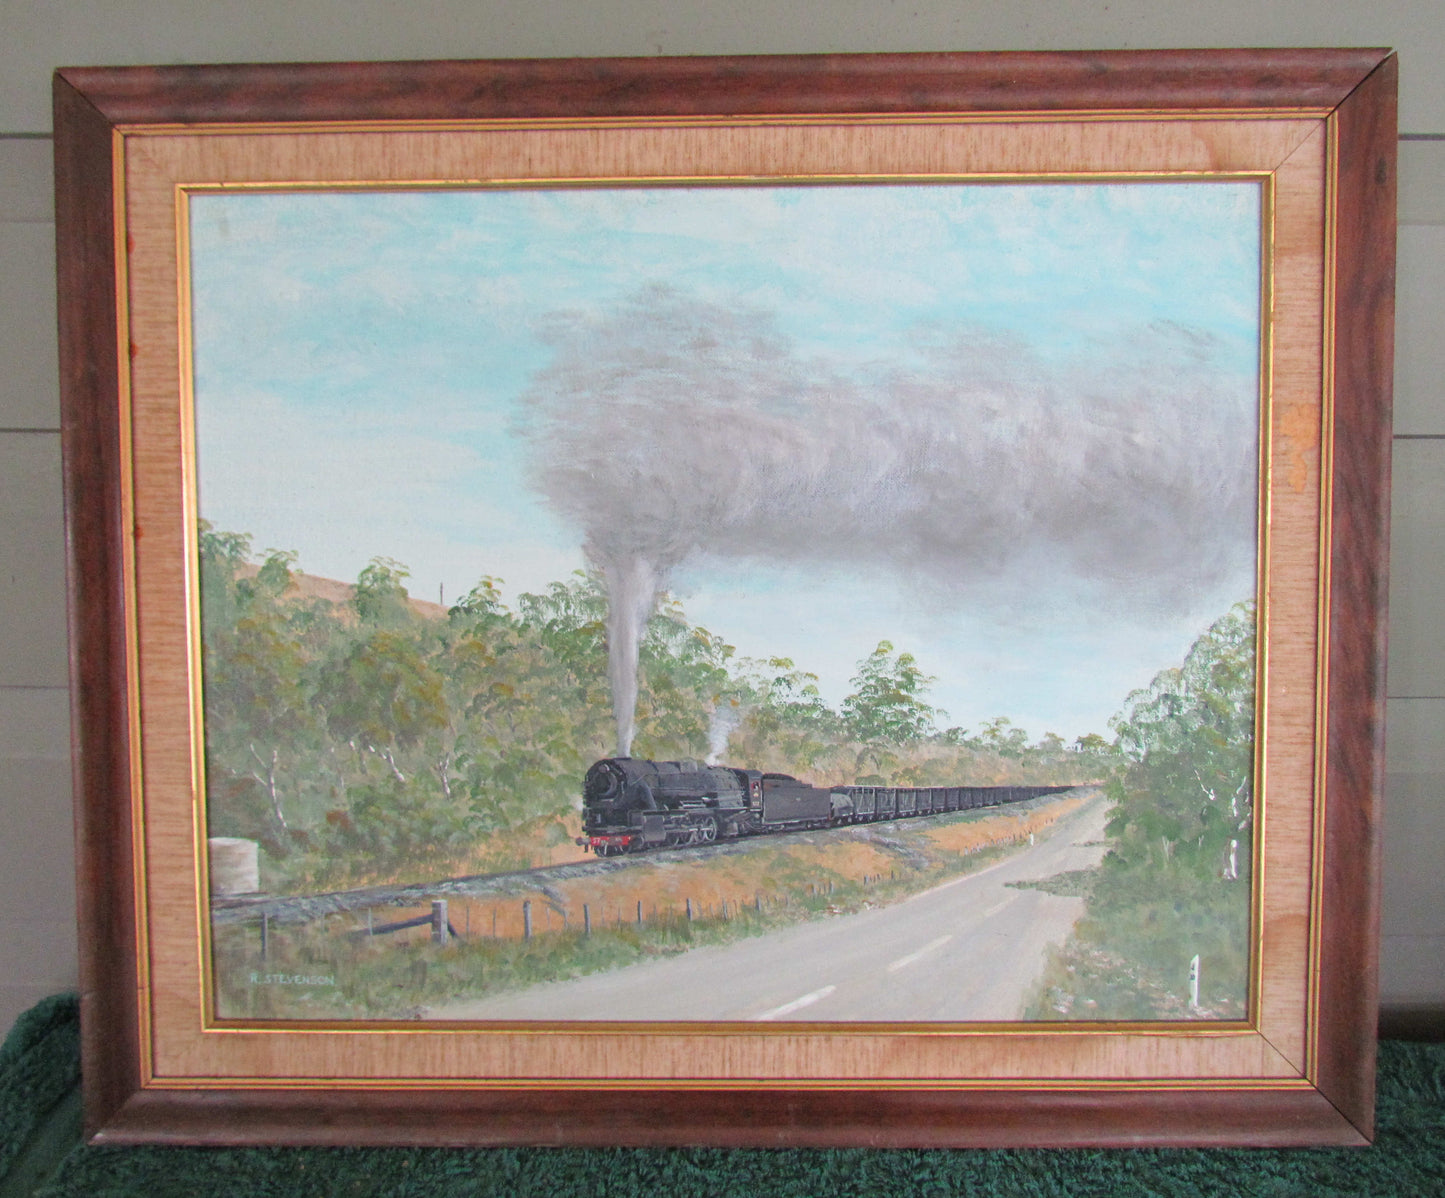 R Stevenson South African Artist Oil On Board Of A Coal Train In The Veld